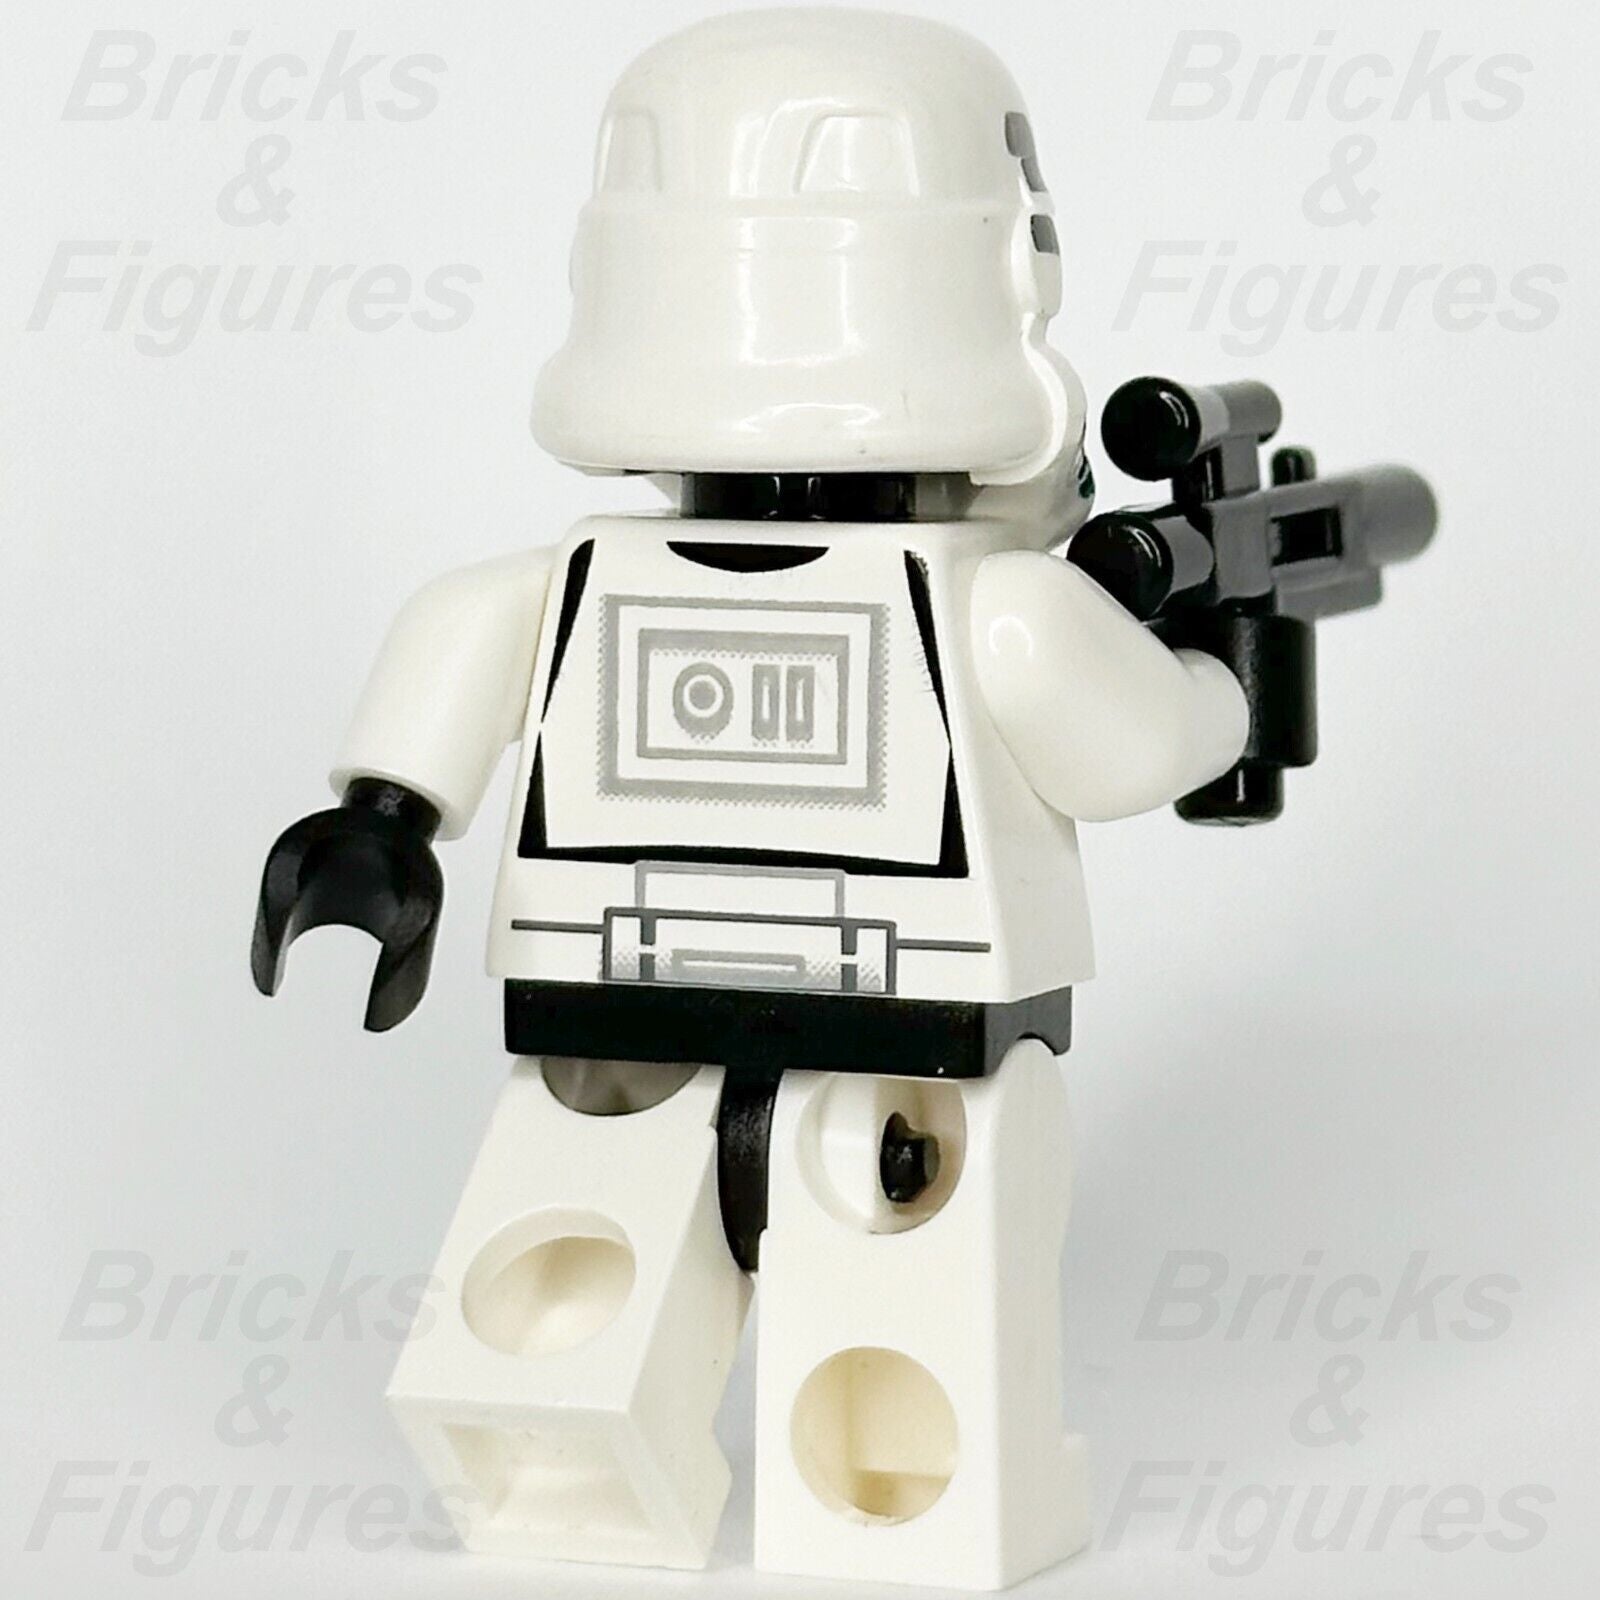 LEGO Star Wars Imperial Stormtrooper Minifigure Legends 7667 10188 10212 8087